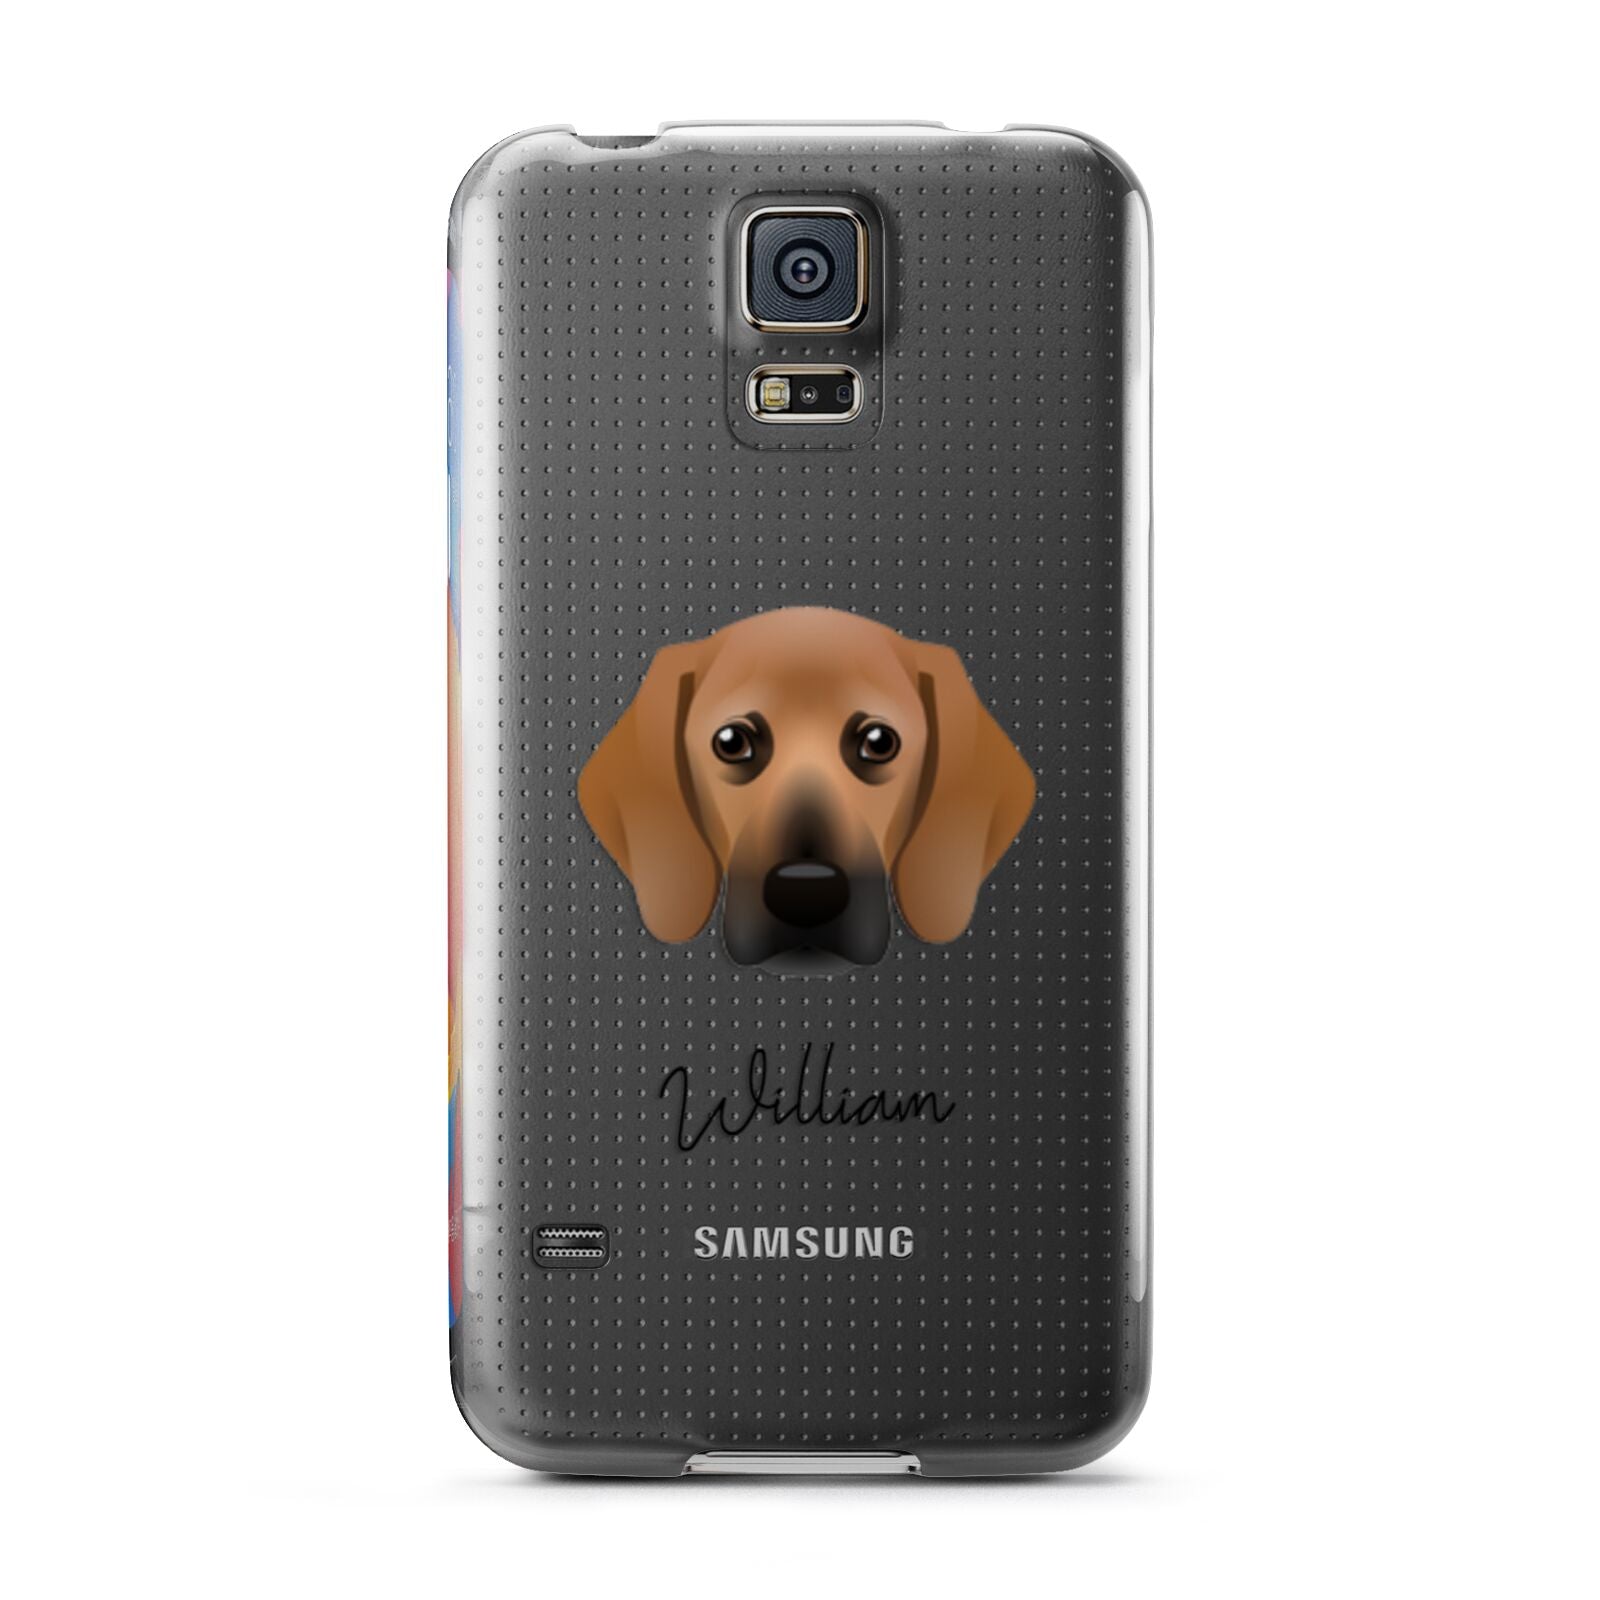 Bassugg Personalised Samsung Galaxy S5 Case